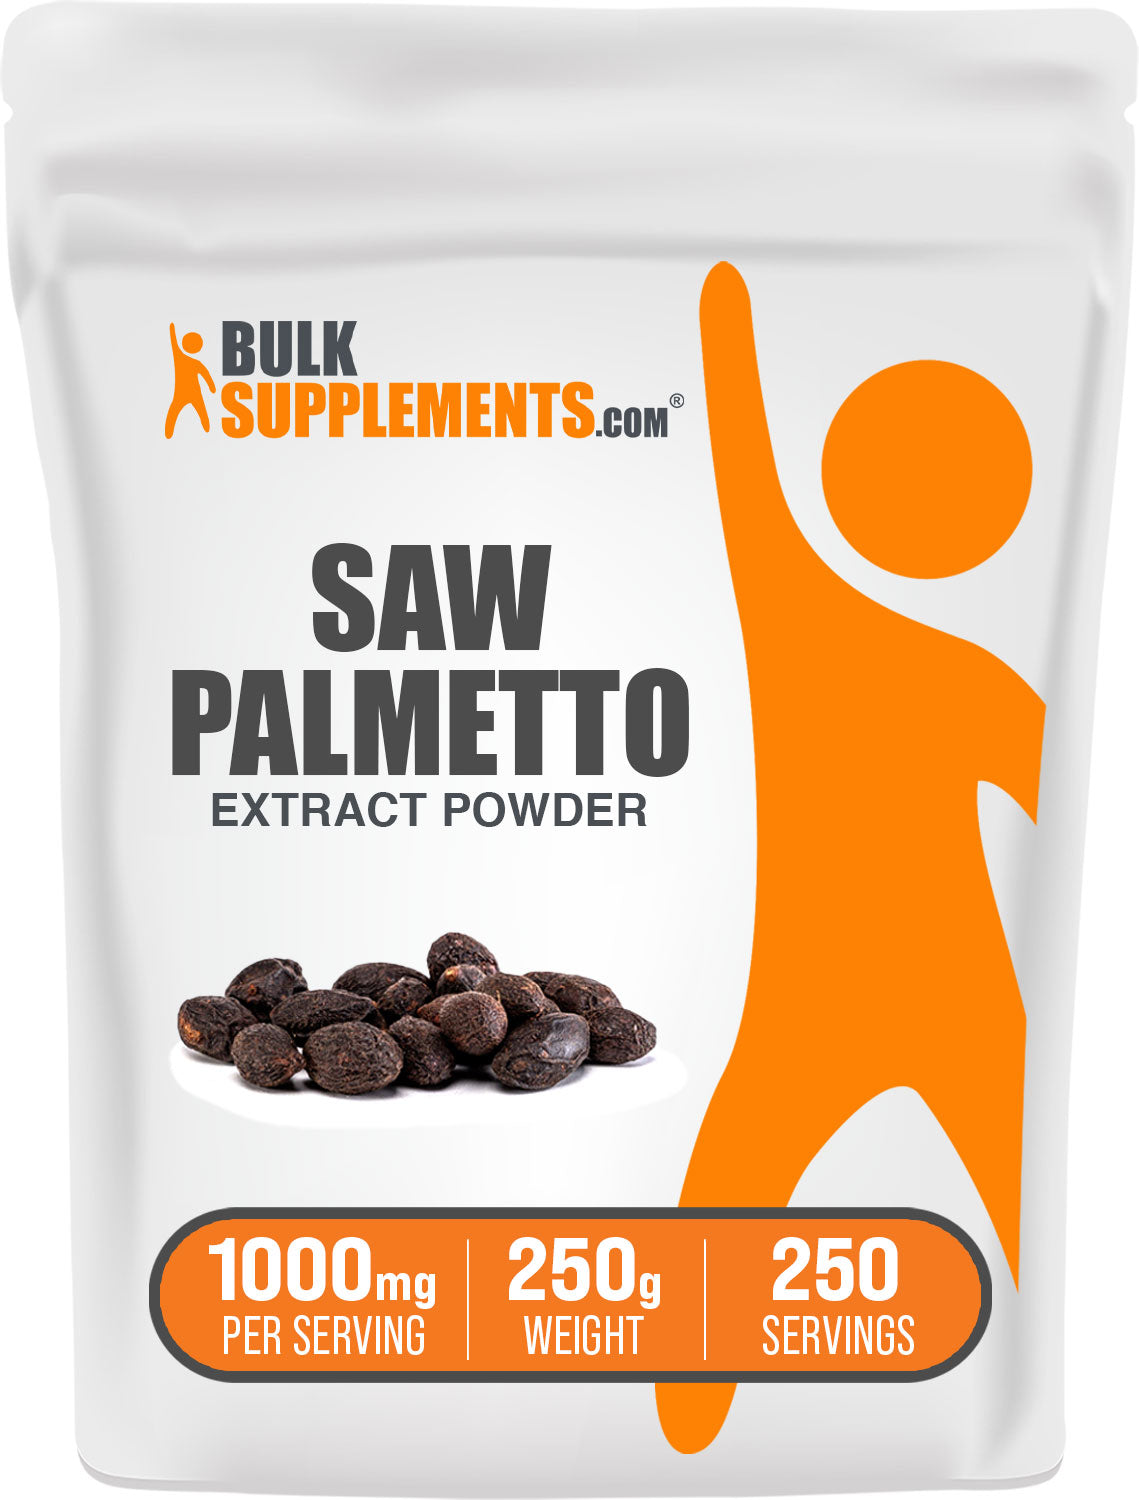 BulkSupplements.com Saw Palmetto Extract Powder 250g bag